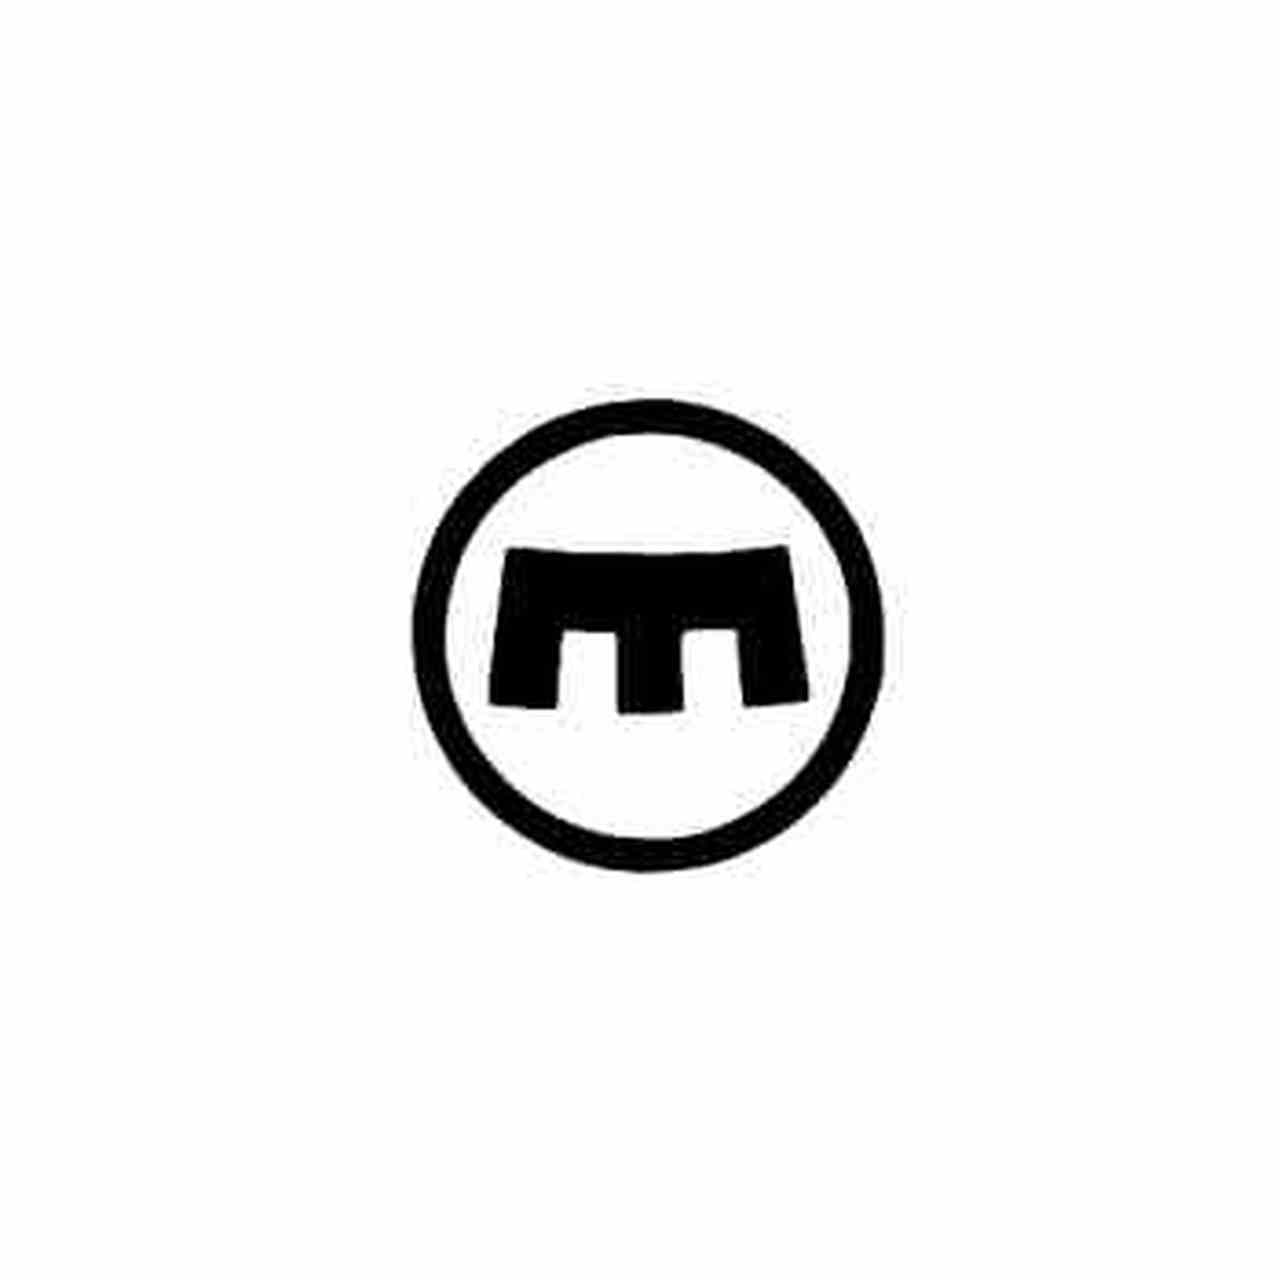 Magura Logo - Magura Round Logo Vinyl Decal